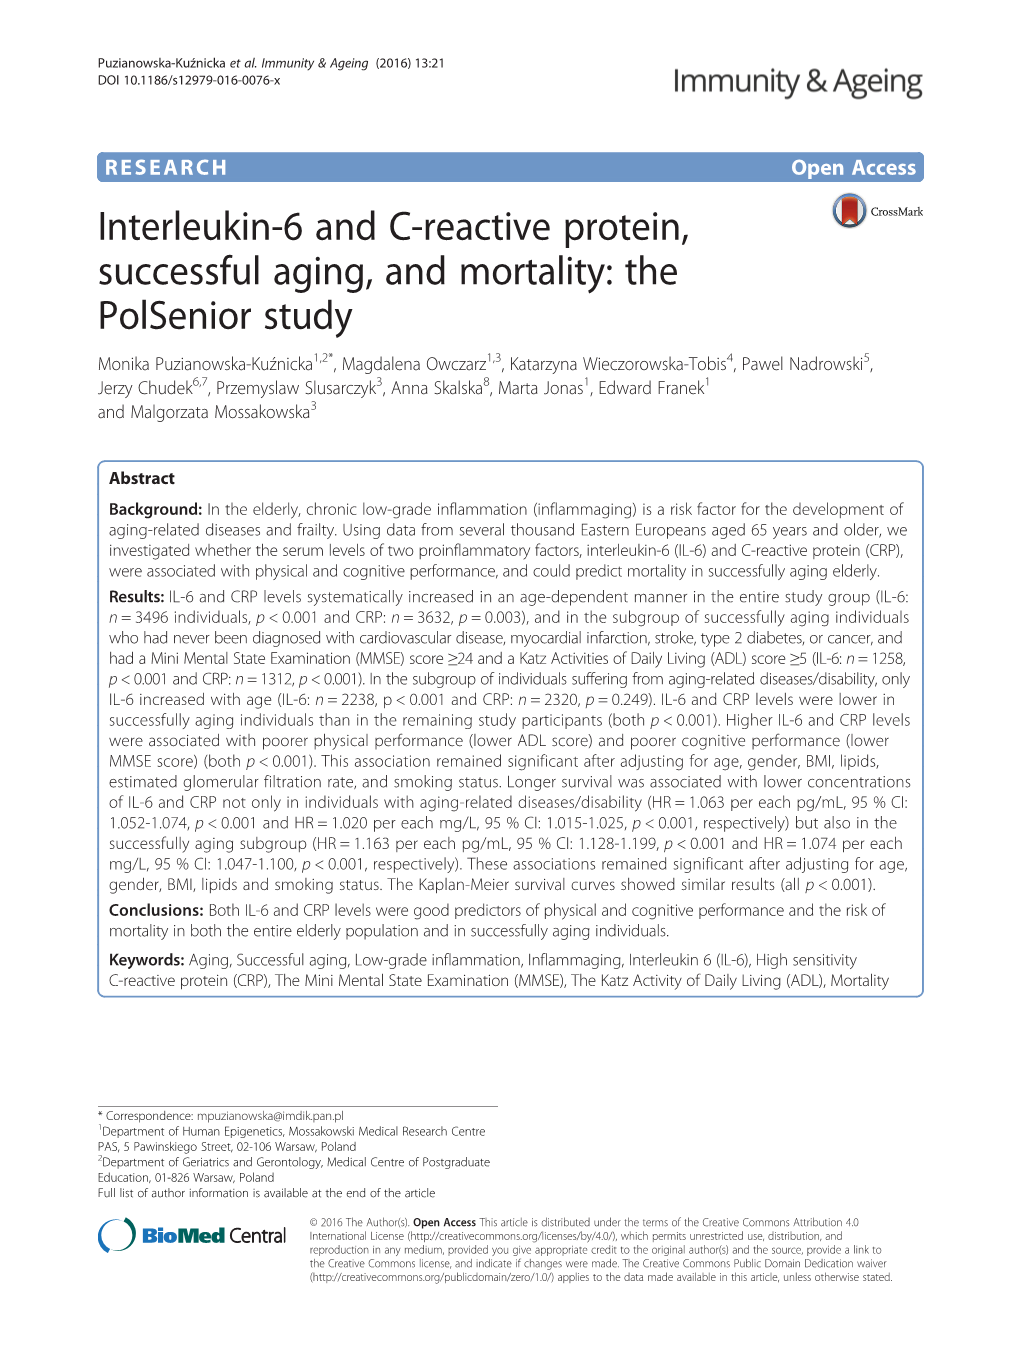 Interleukin-6 and C-Reactive Protein, Successful